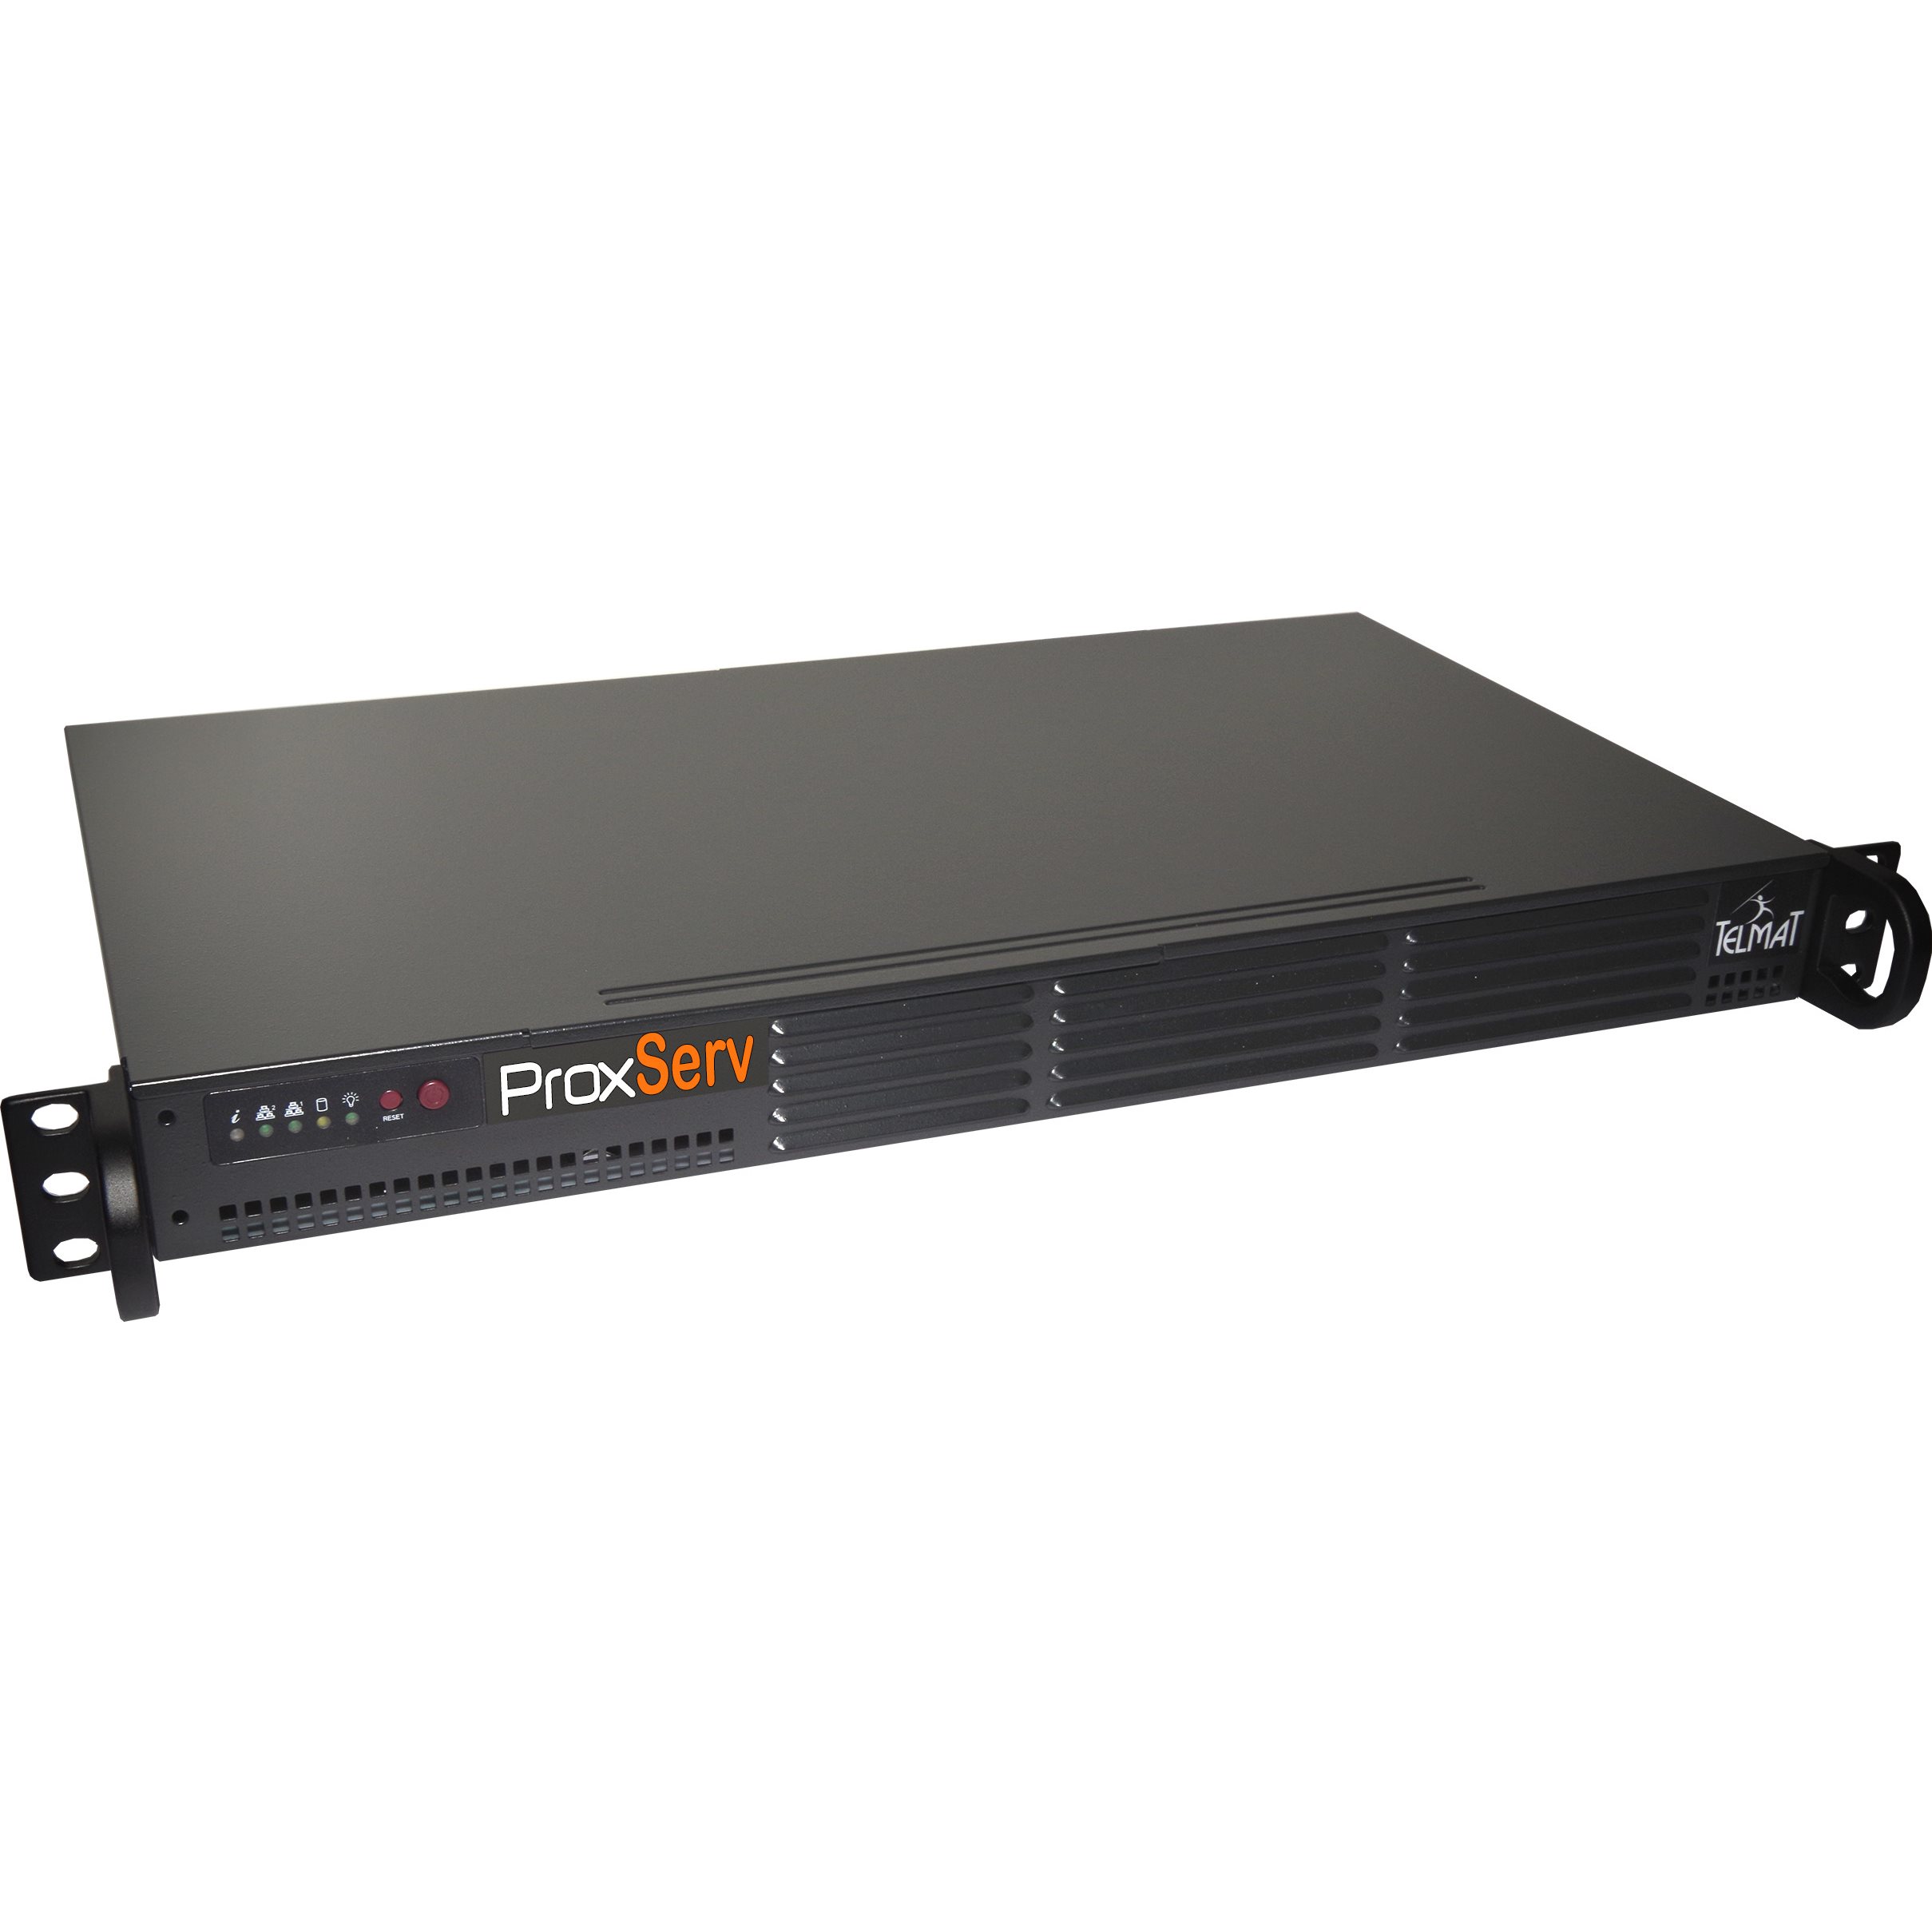   Contrôleurs Hot Spot   ProxServ 250 médias, rack 1U 3 Ethernet Giga PSV0250RCK